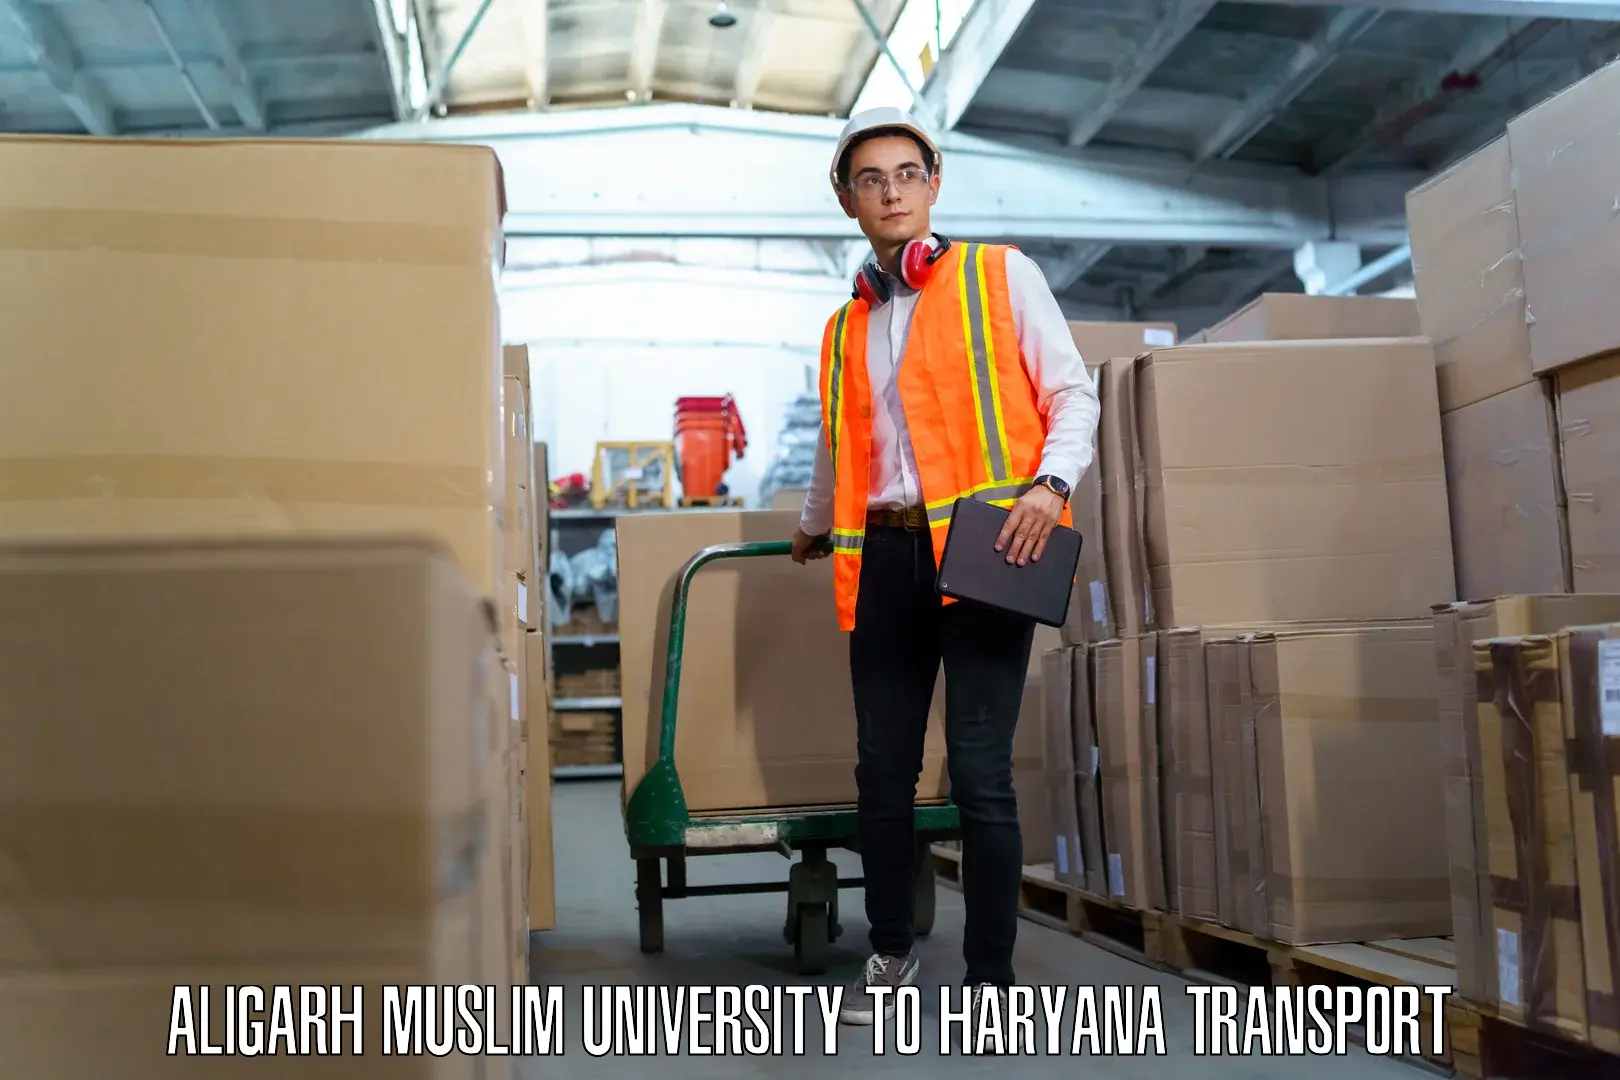 Container transport service Aligarh Muslim University to NCR Haryana